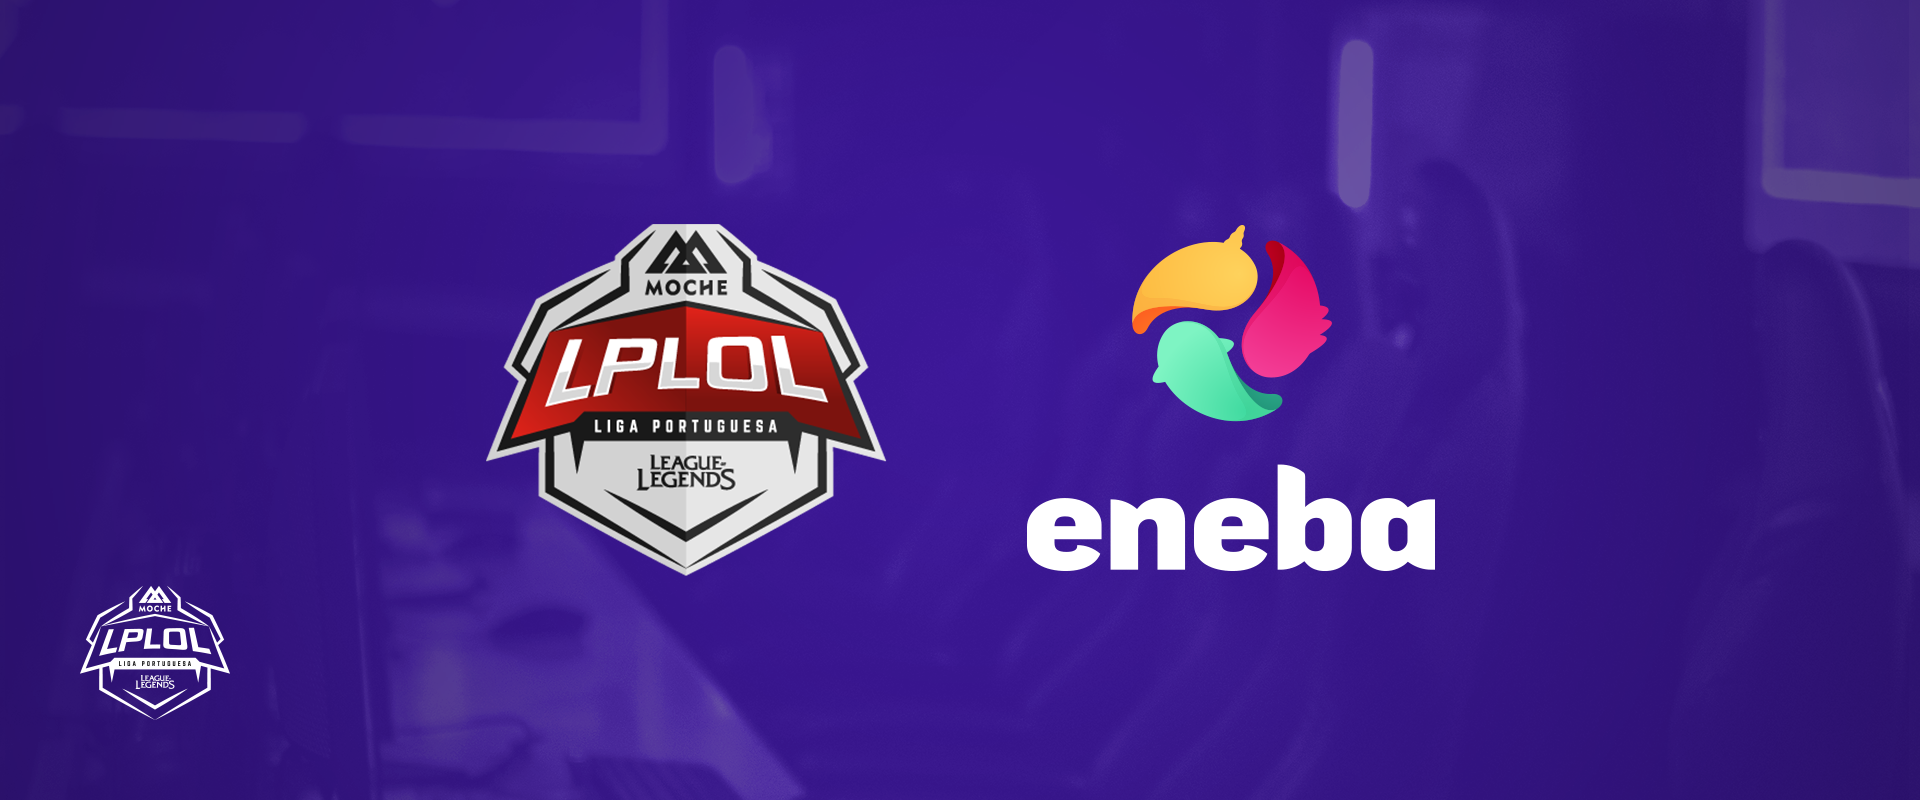 Eneba apoia oficialmente a Liga Portuguesa de League of Legends